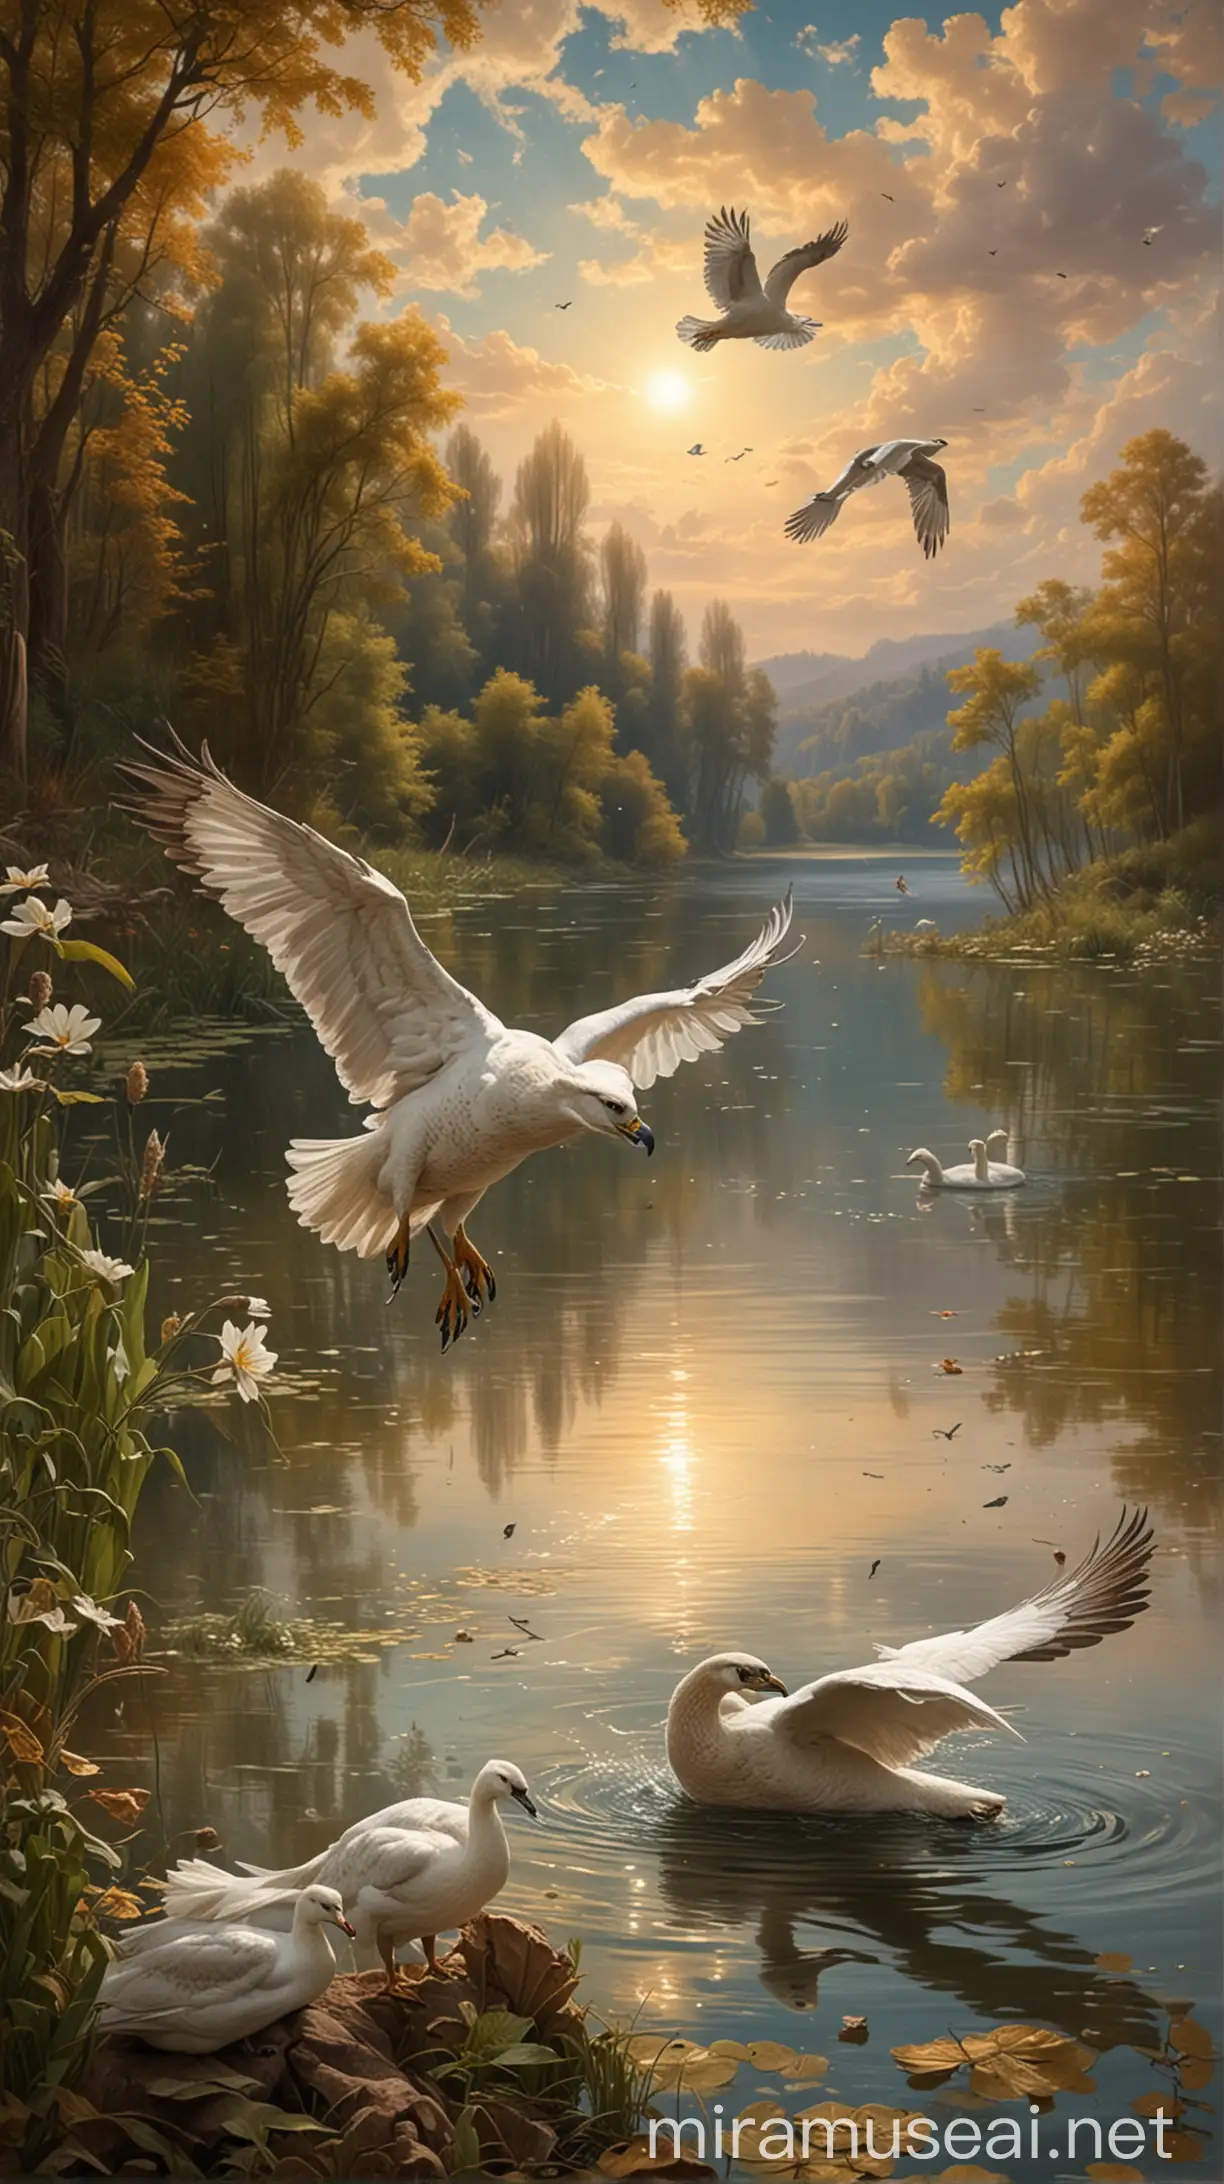 Majestic Falcon Soaring Above Swan on Calm Lake